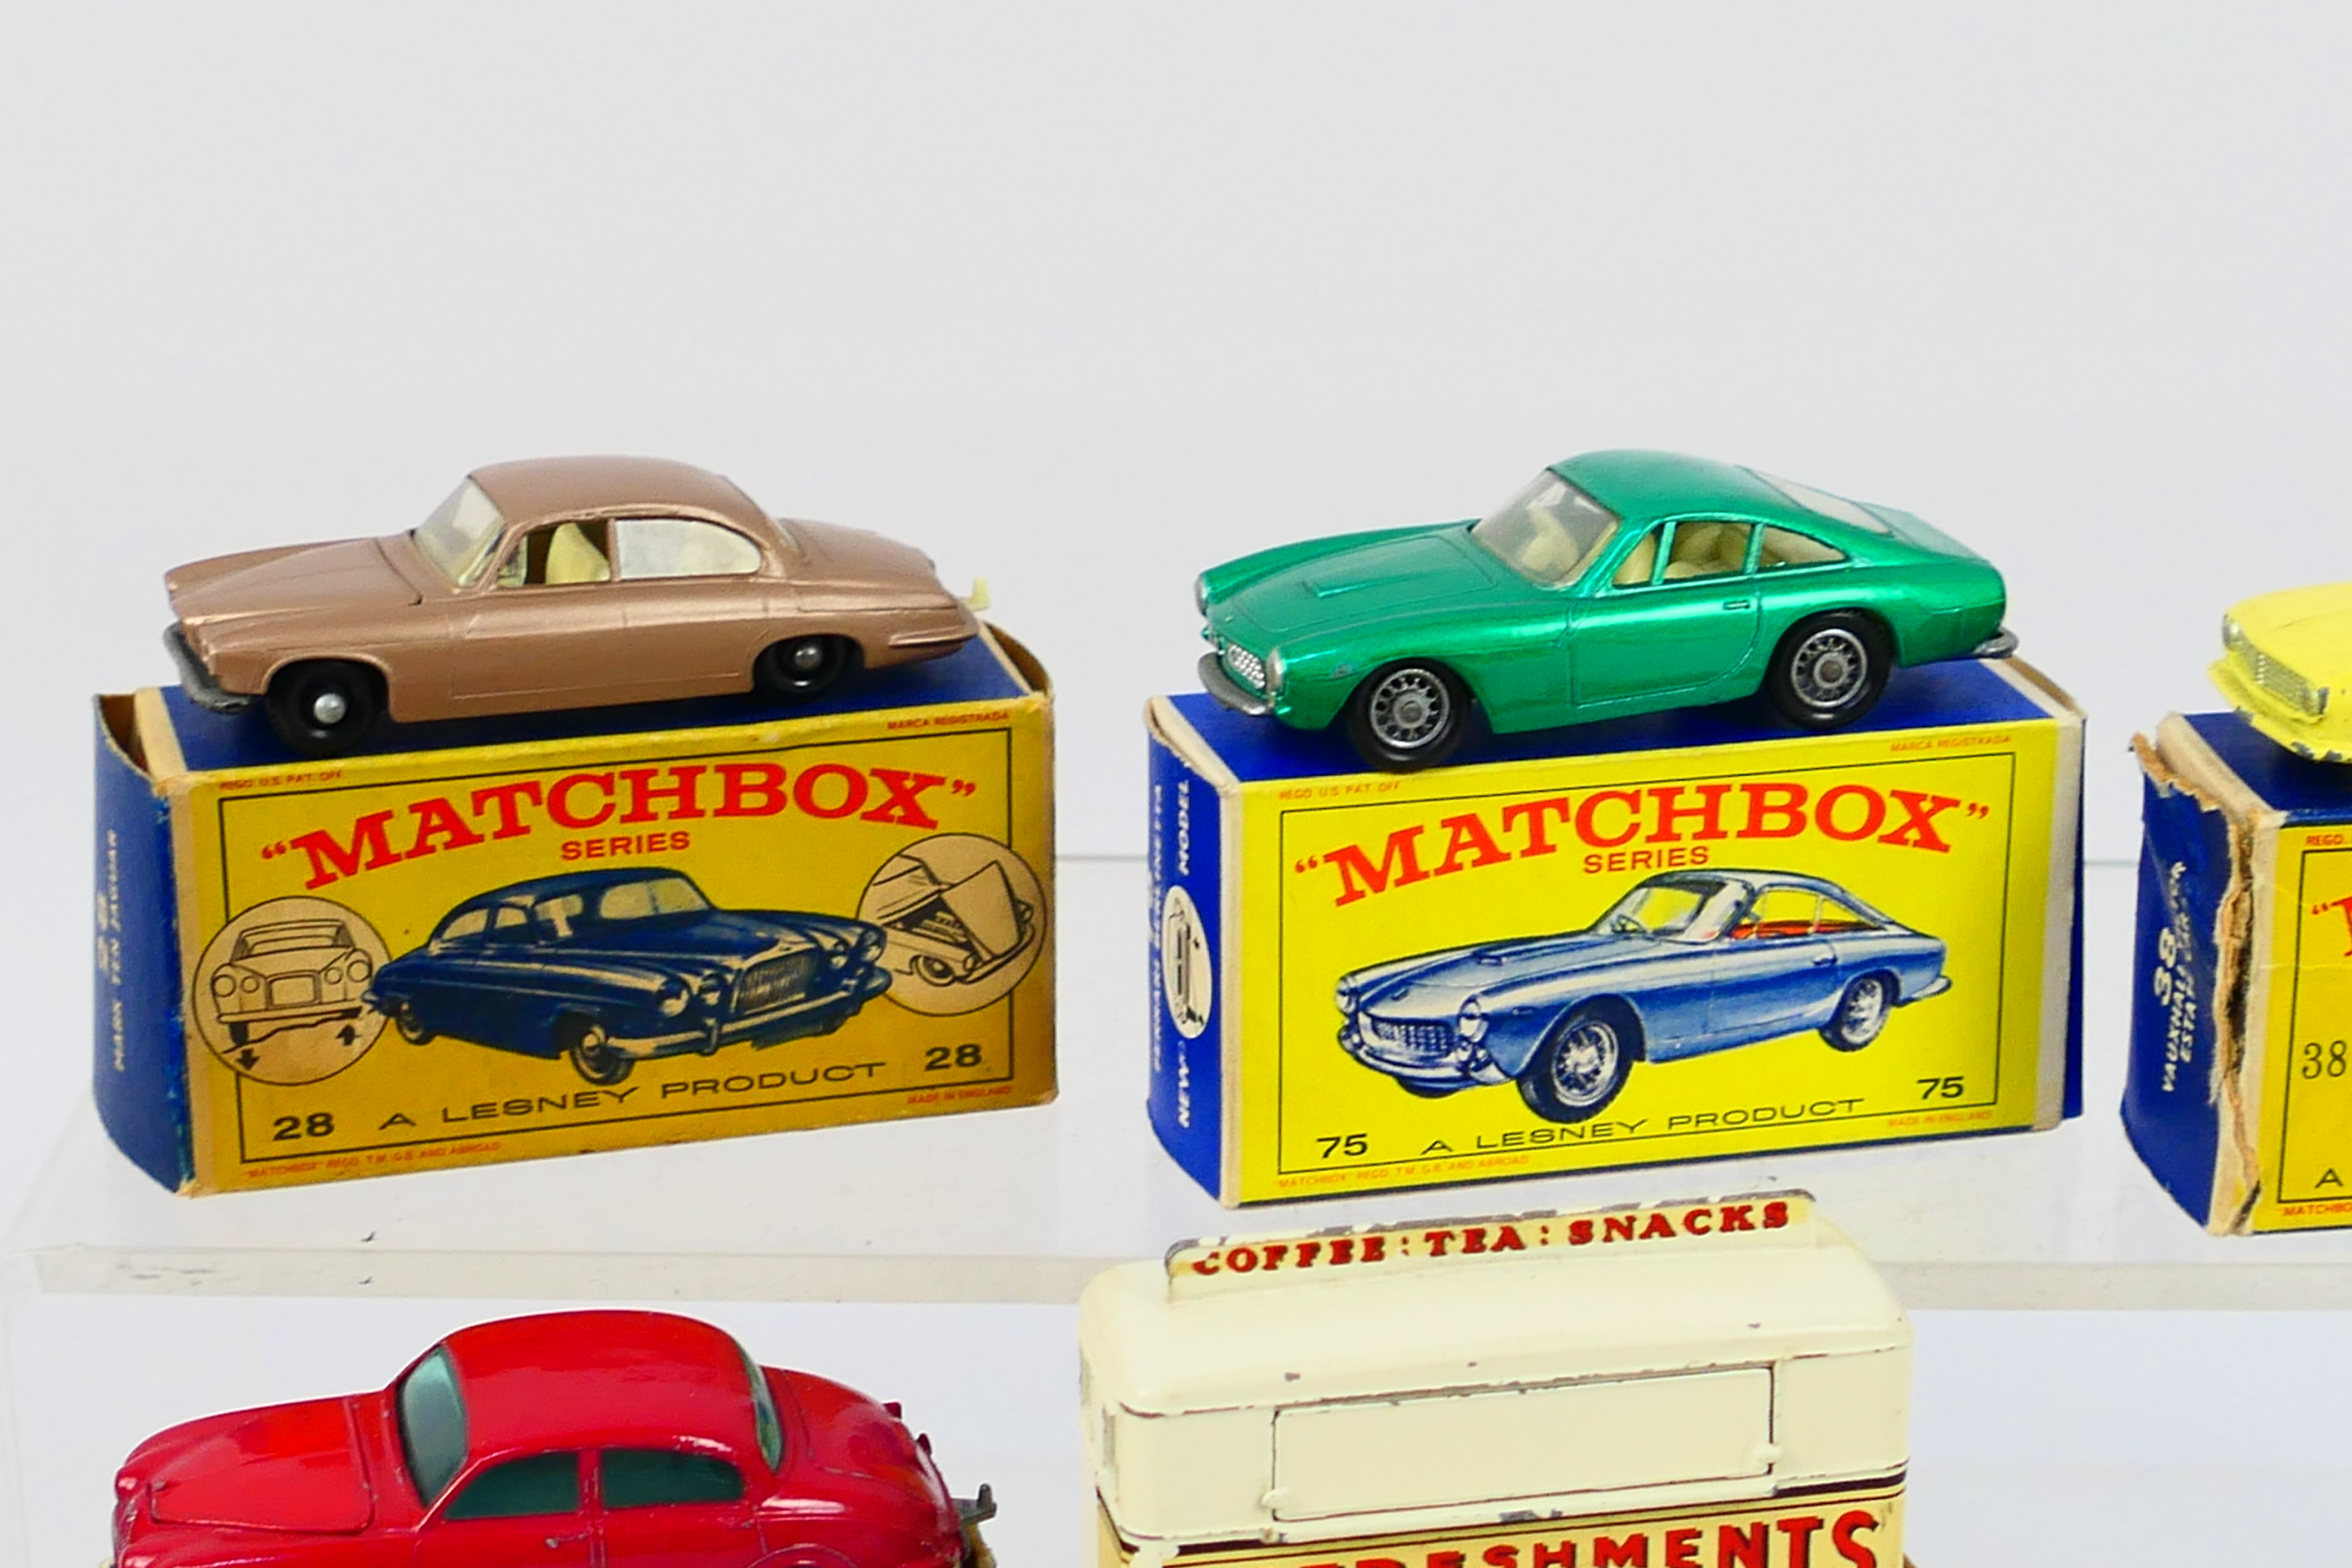 Matchbox - 11 x boxed/unboxed Matchbox die-cast model vehicles - Lot includes a #75 Ferrari - Image 2 of 8